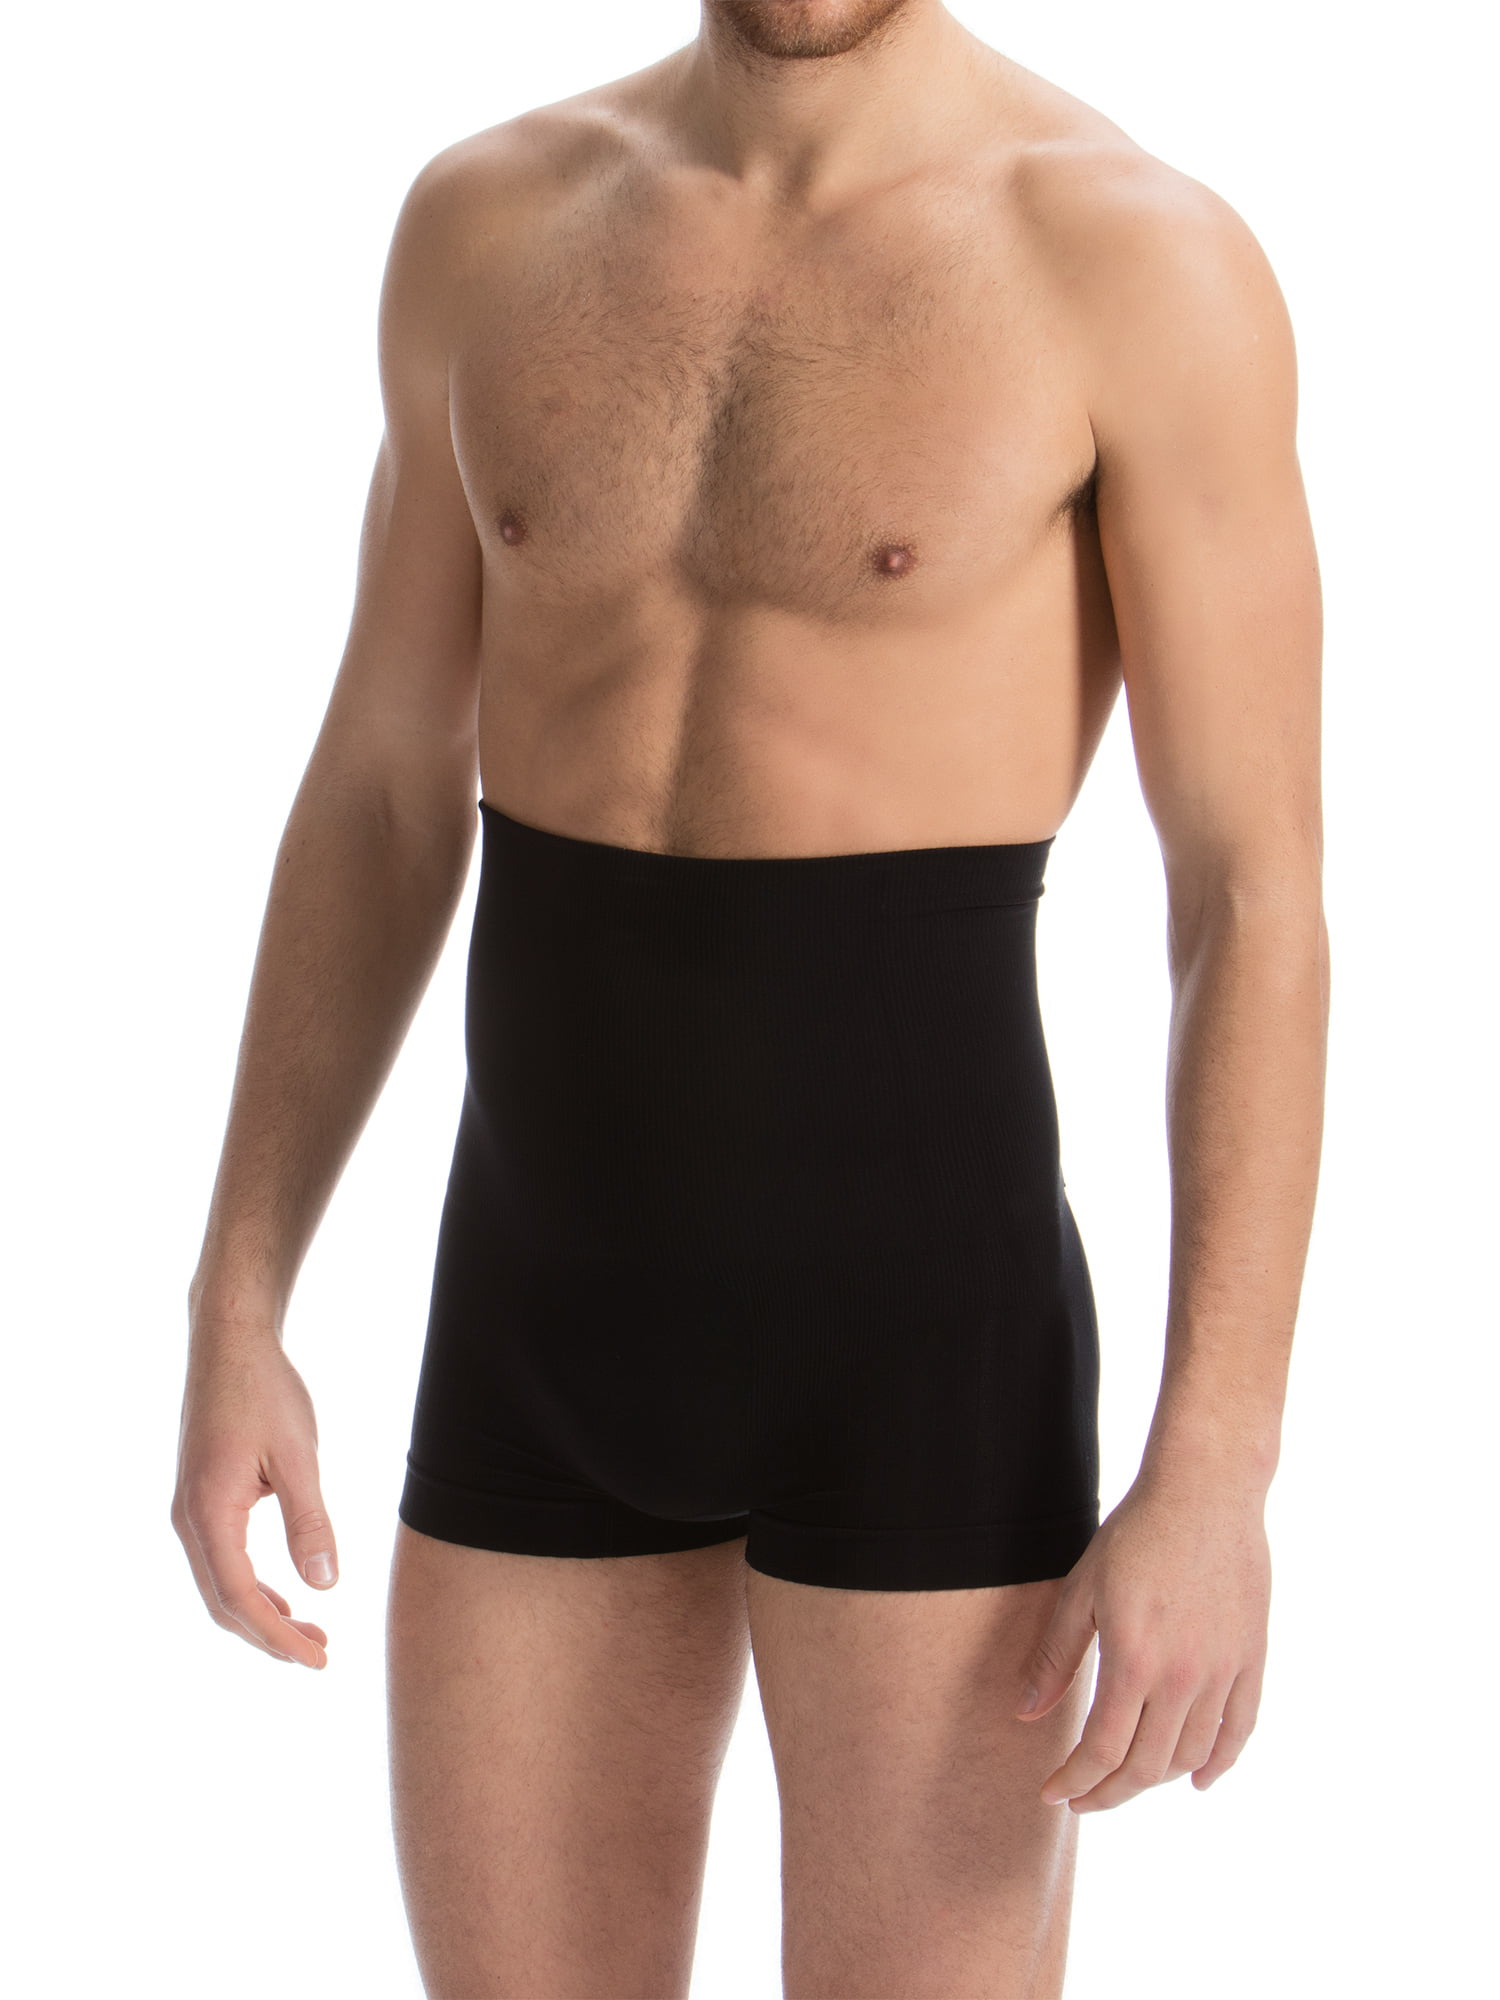 besluiten Langskomen Zonder twijfel FarmaCell Man 402S (Black, L) Men's body shaping cotton boxers elastic  waistband back splints, 100% Made in Italy - Walmart.com